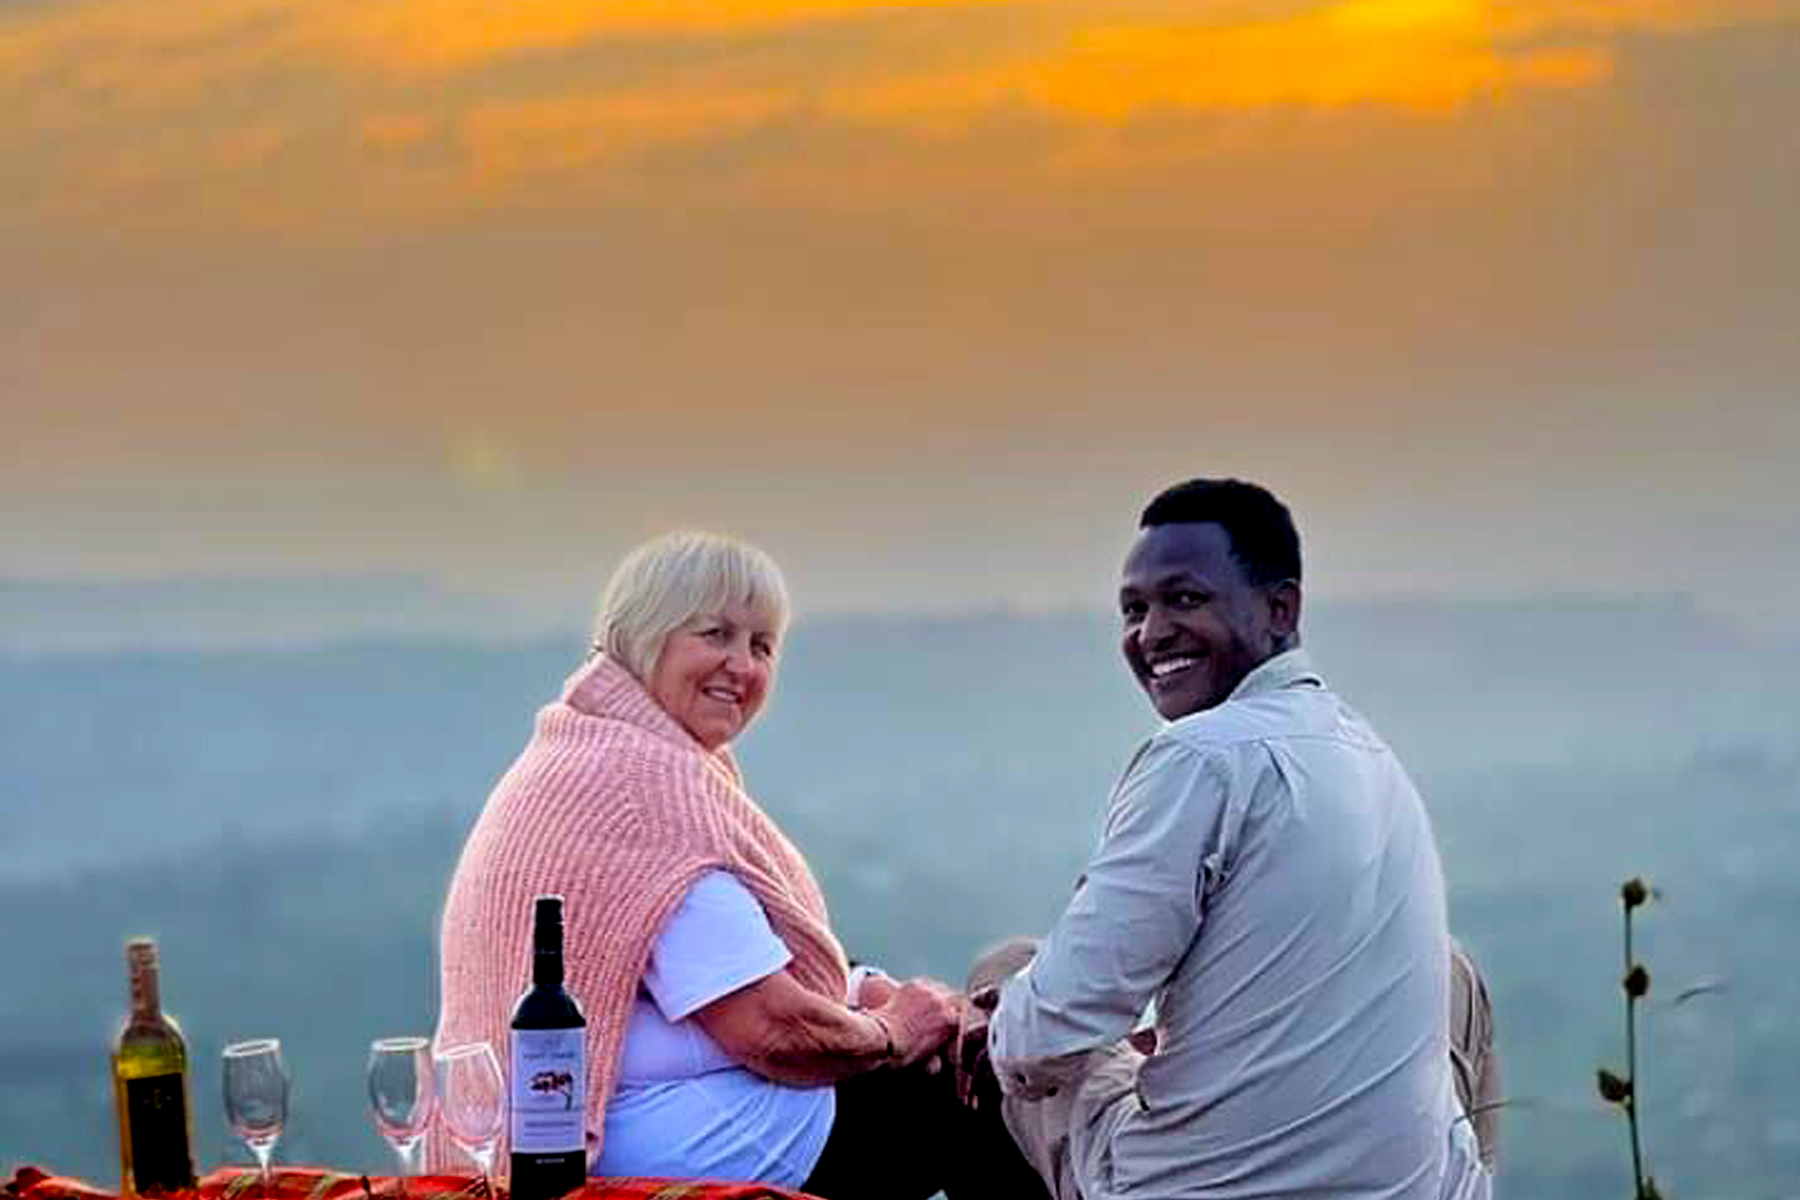 Sundowner Experience at Sipi Falls Mt Elgon.